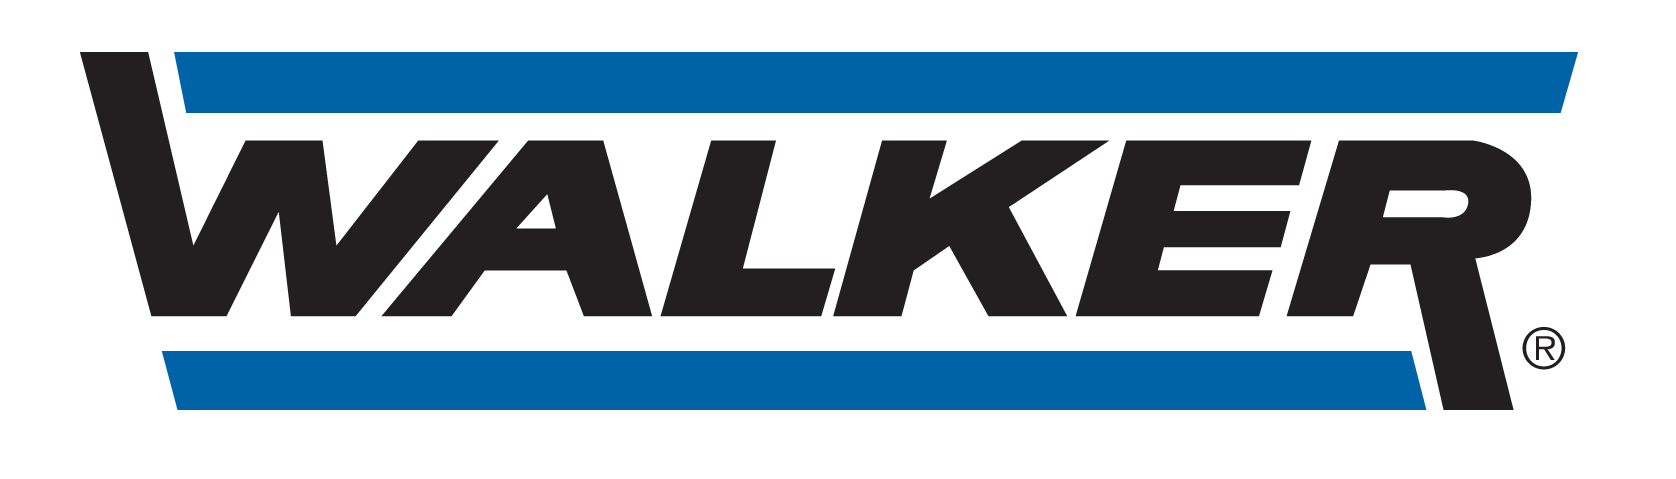 VERNEA AUTOMECA - logo Walker